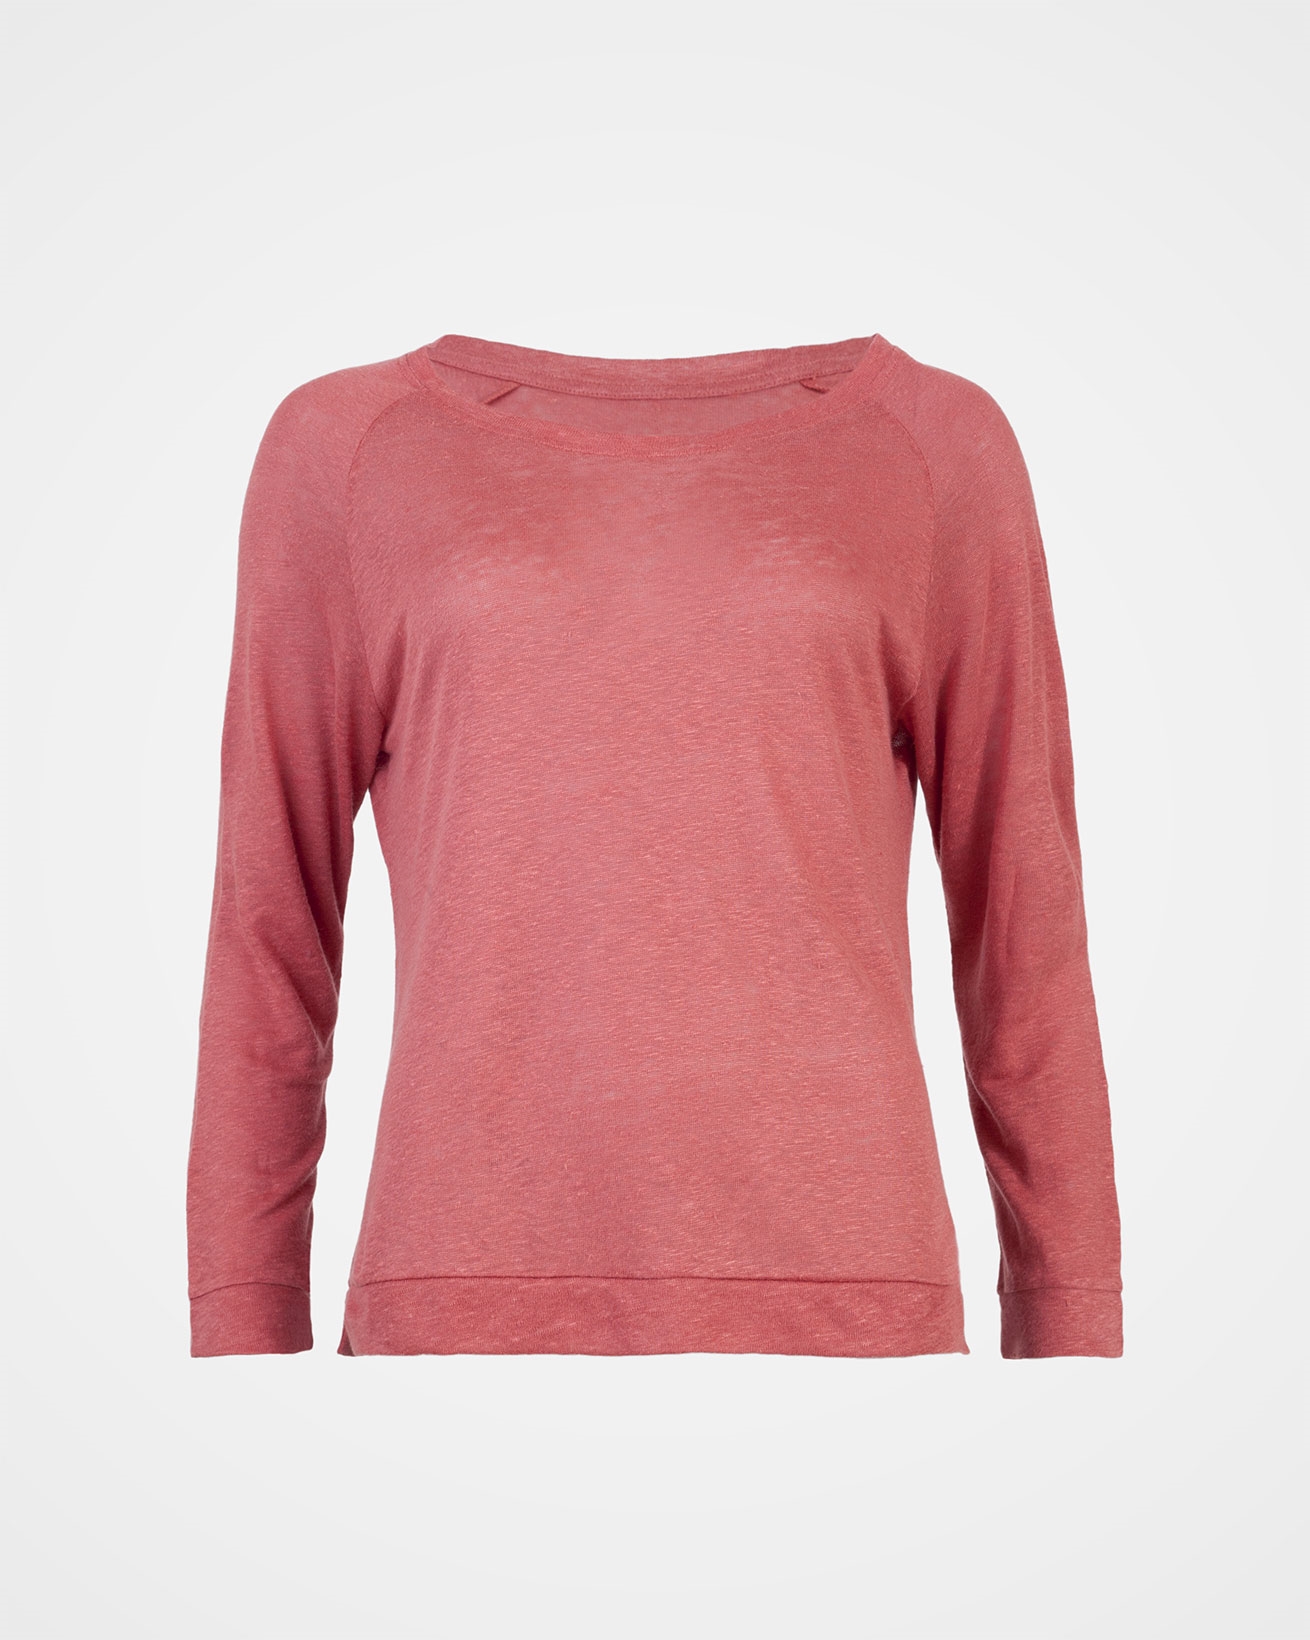 7584_linen-cotton-sweatshirt_antique-rose_front_v5.jpg